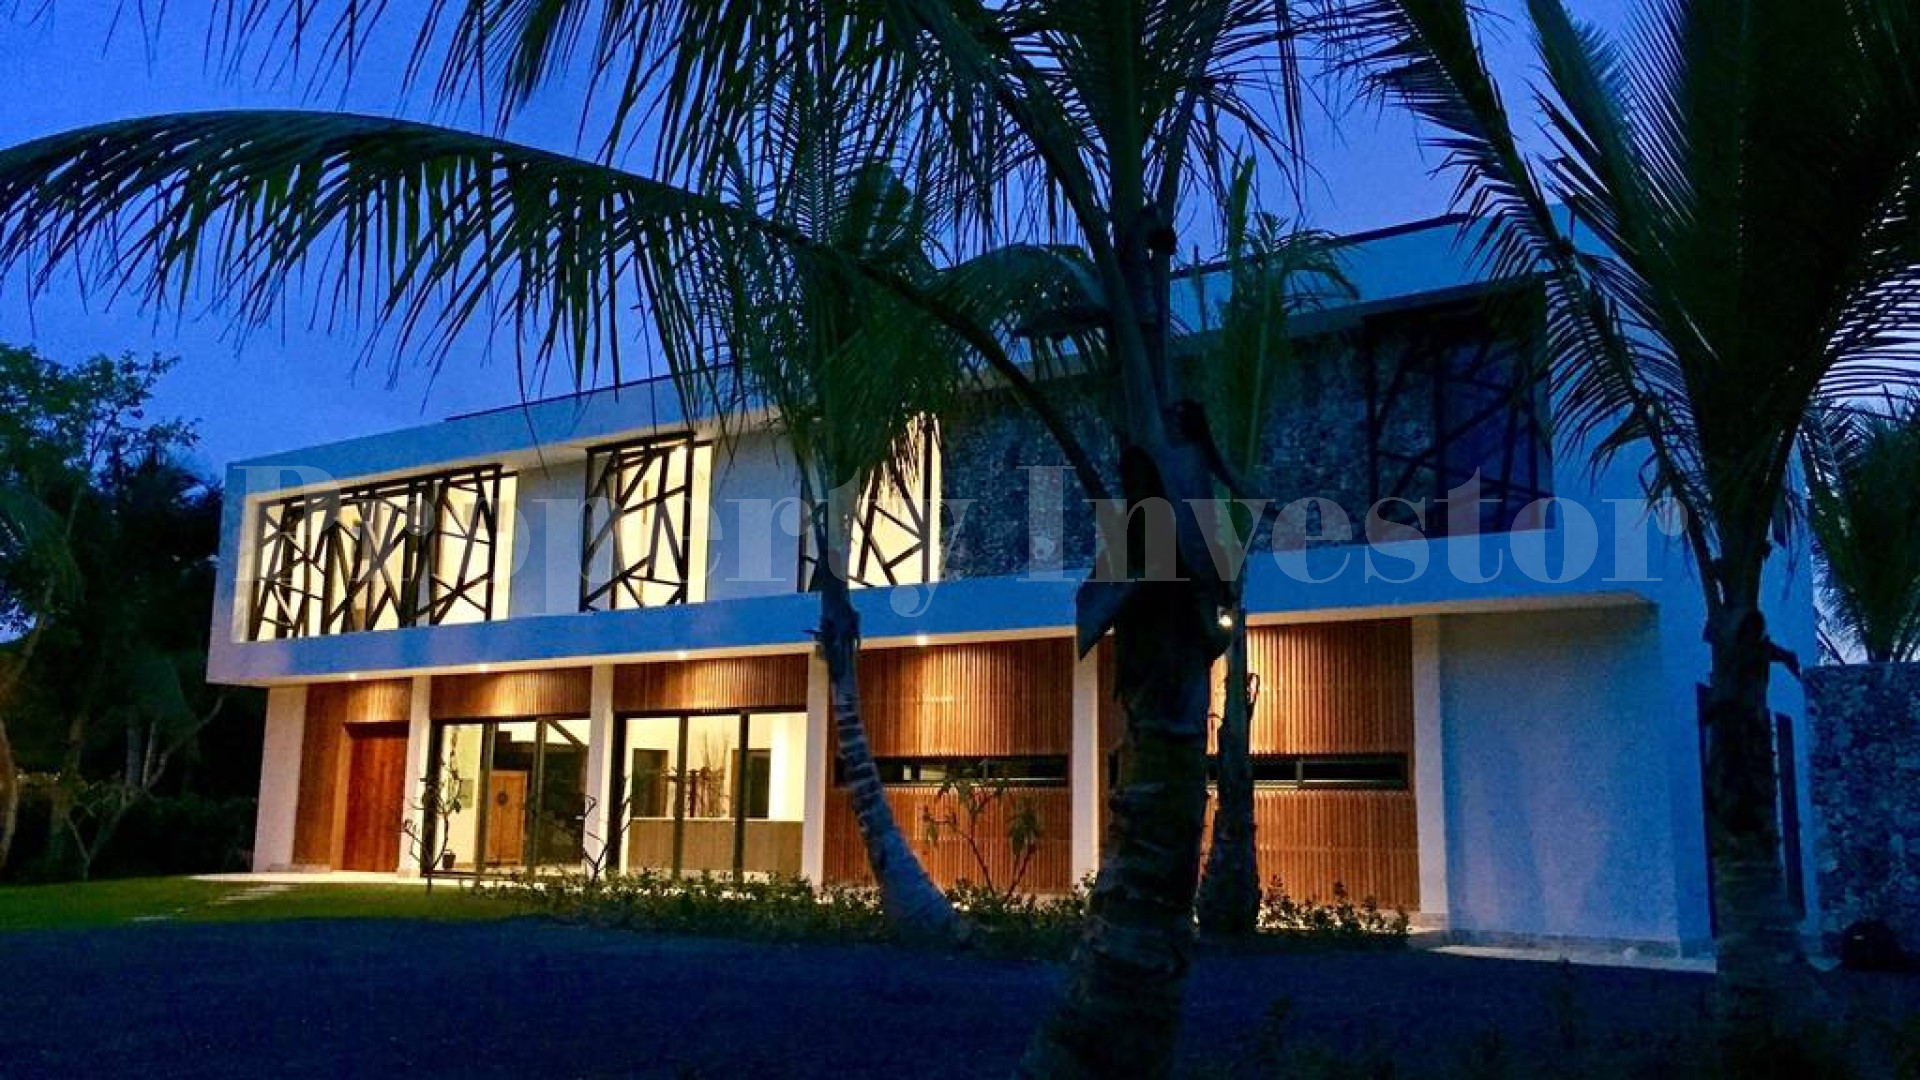 Fabulous 4 Bedroom Luxury Designer Golf Villa for Sale in Punta Cana, Dominican Republic